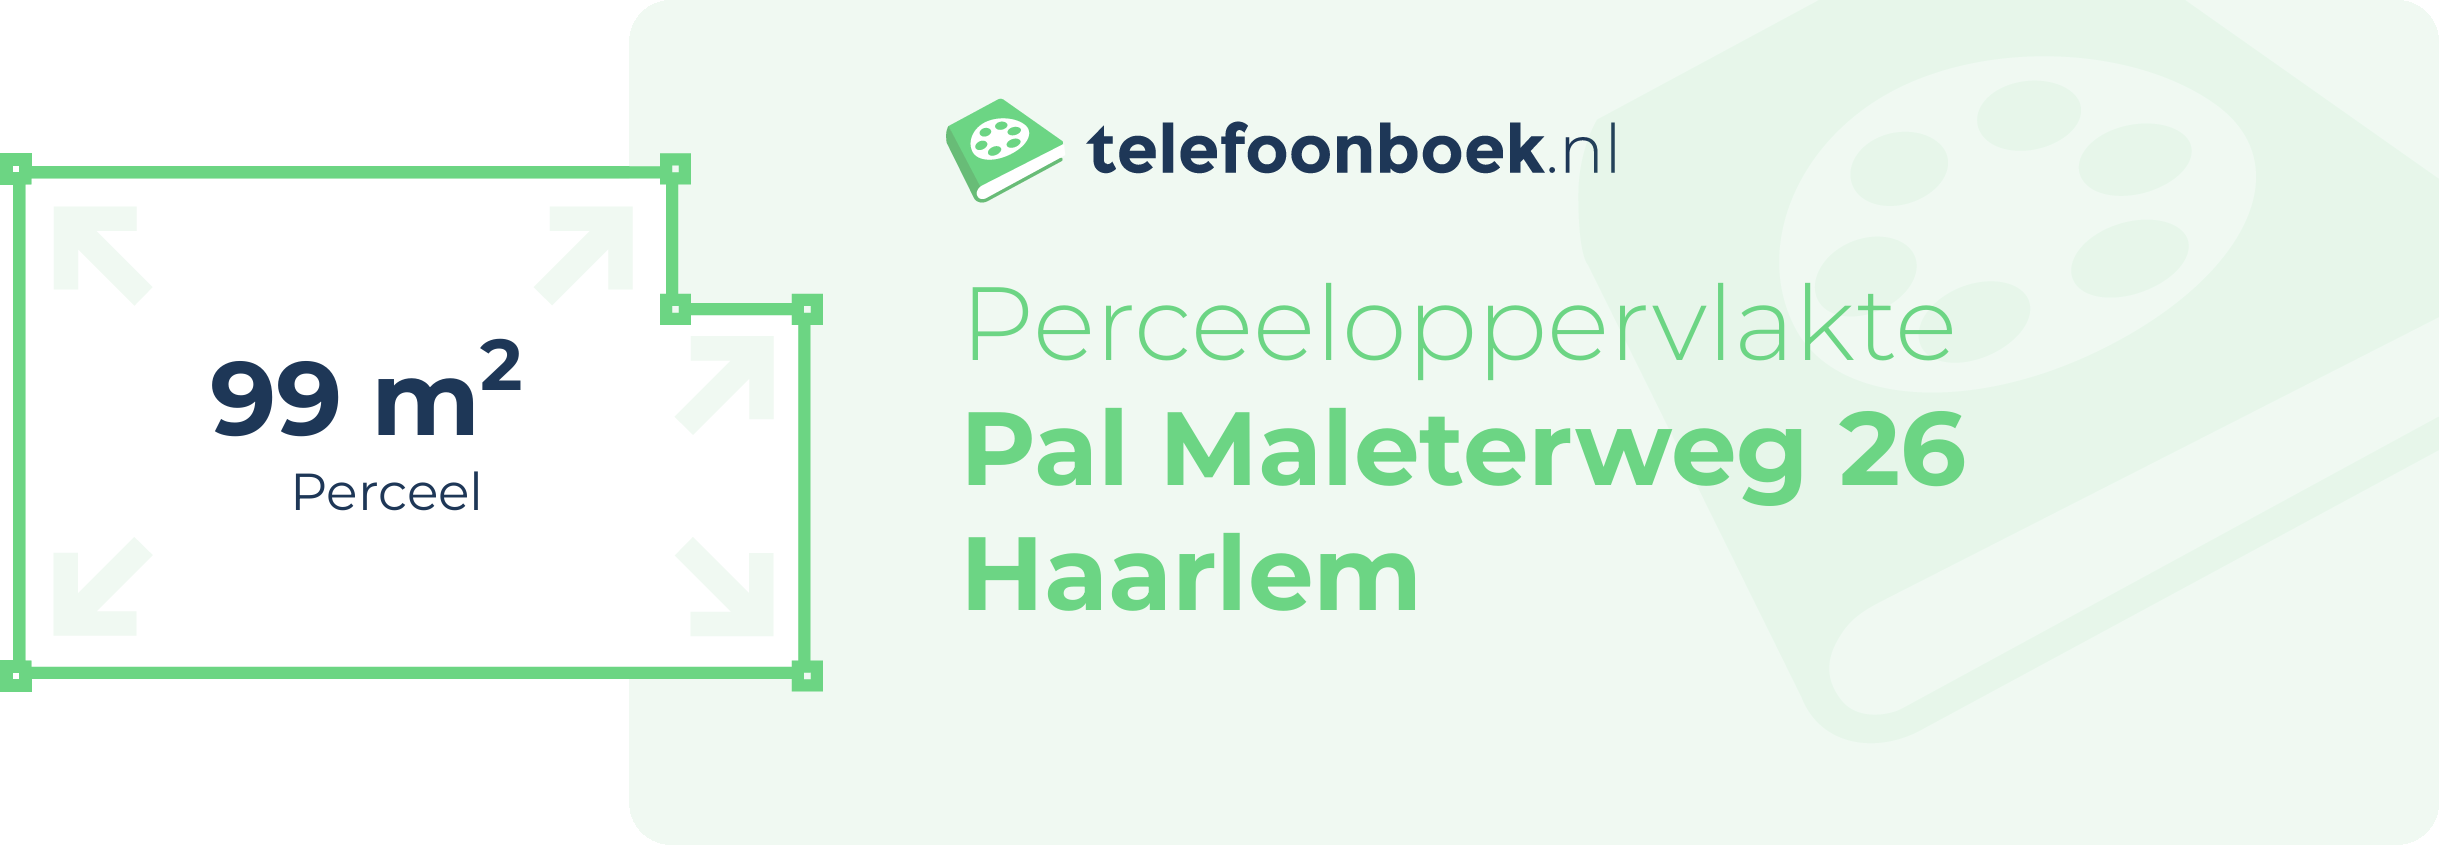 Perceeloppervlakte Pal Maleterweg 26 Haarlem